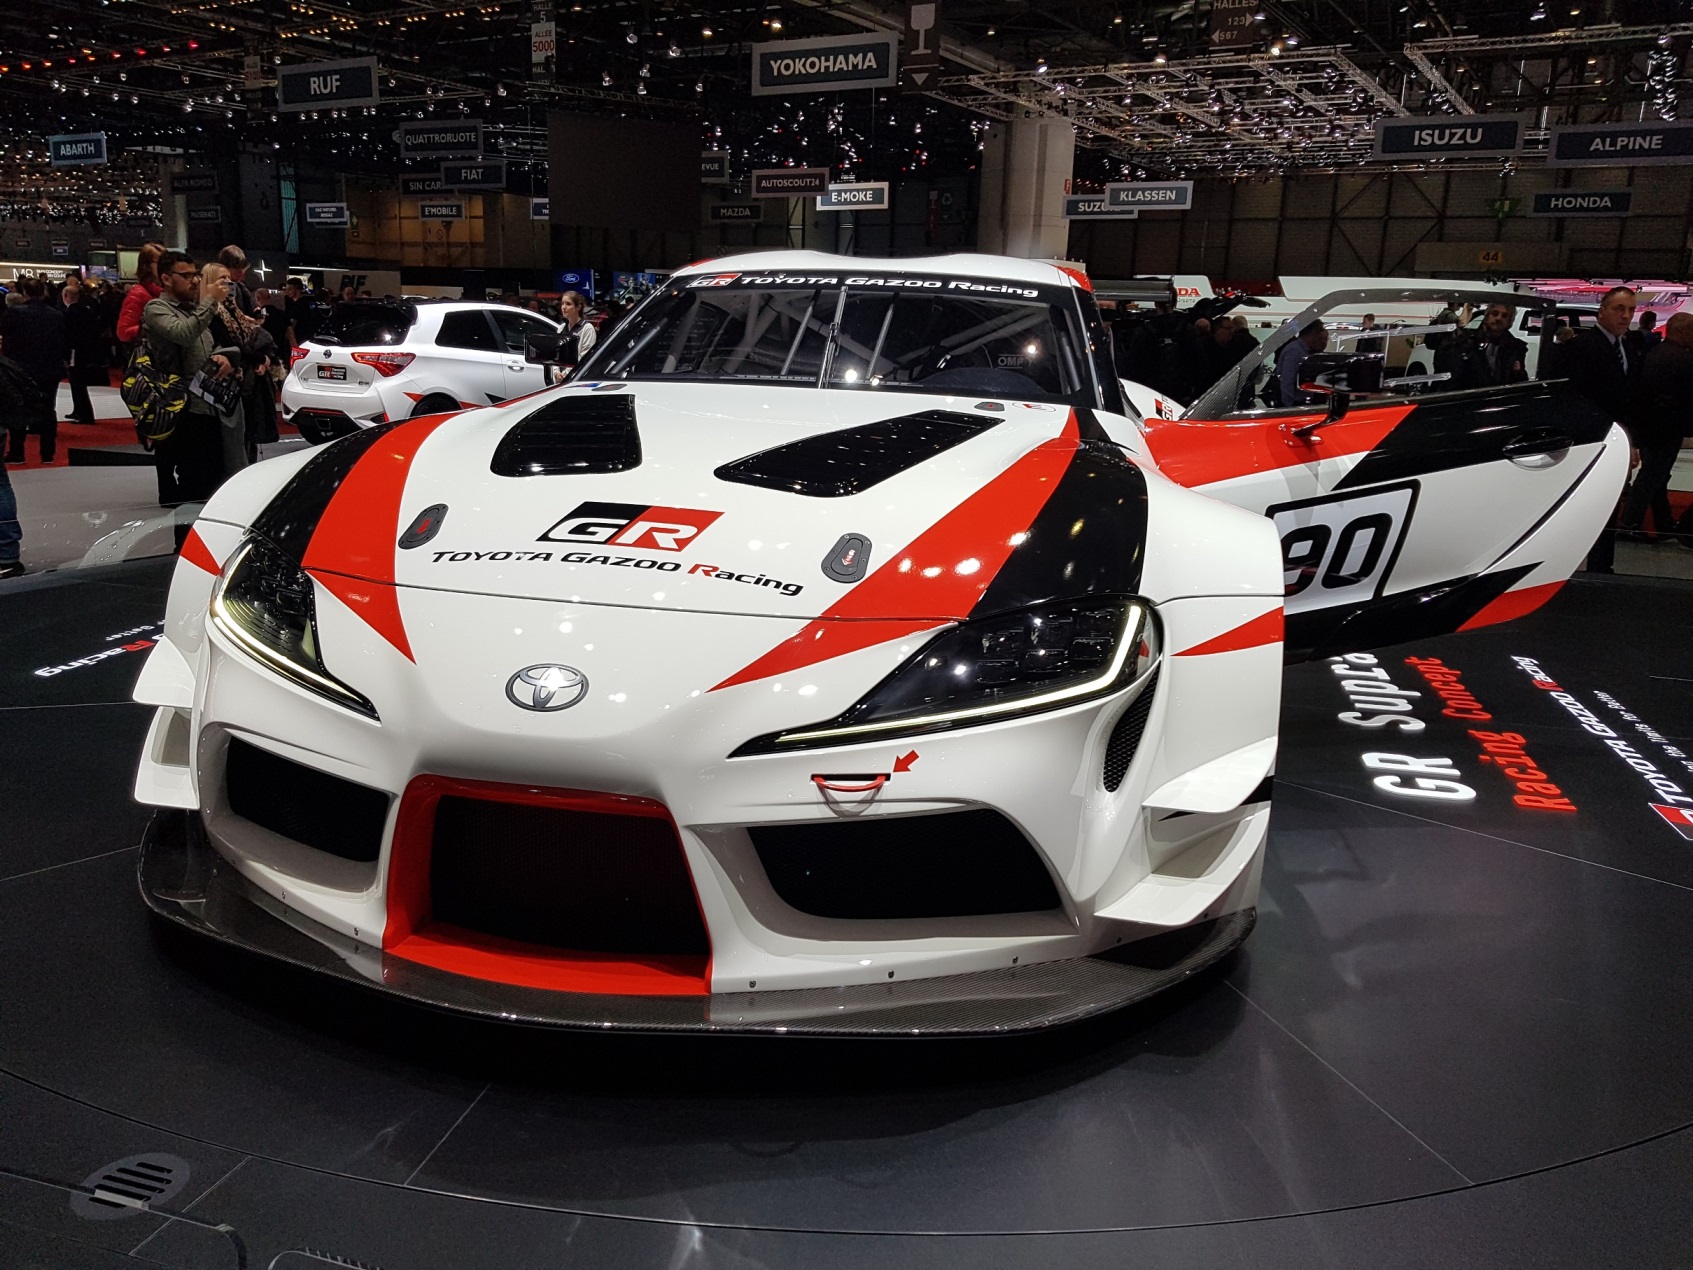 Toyota Suprа Racing Concept